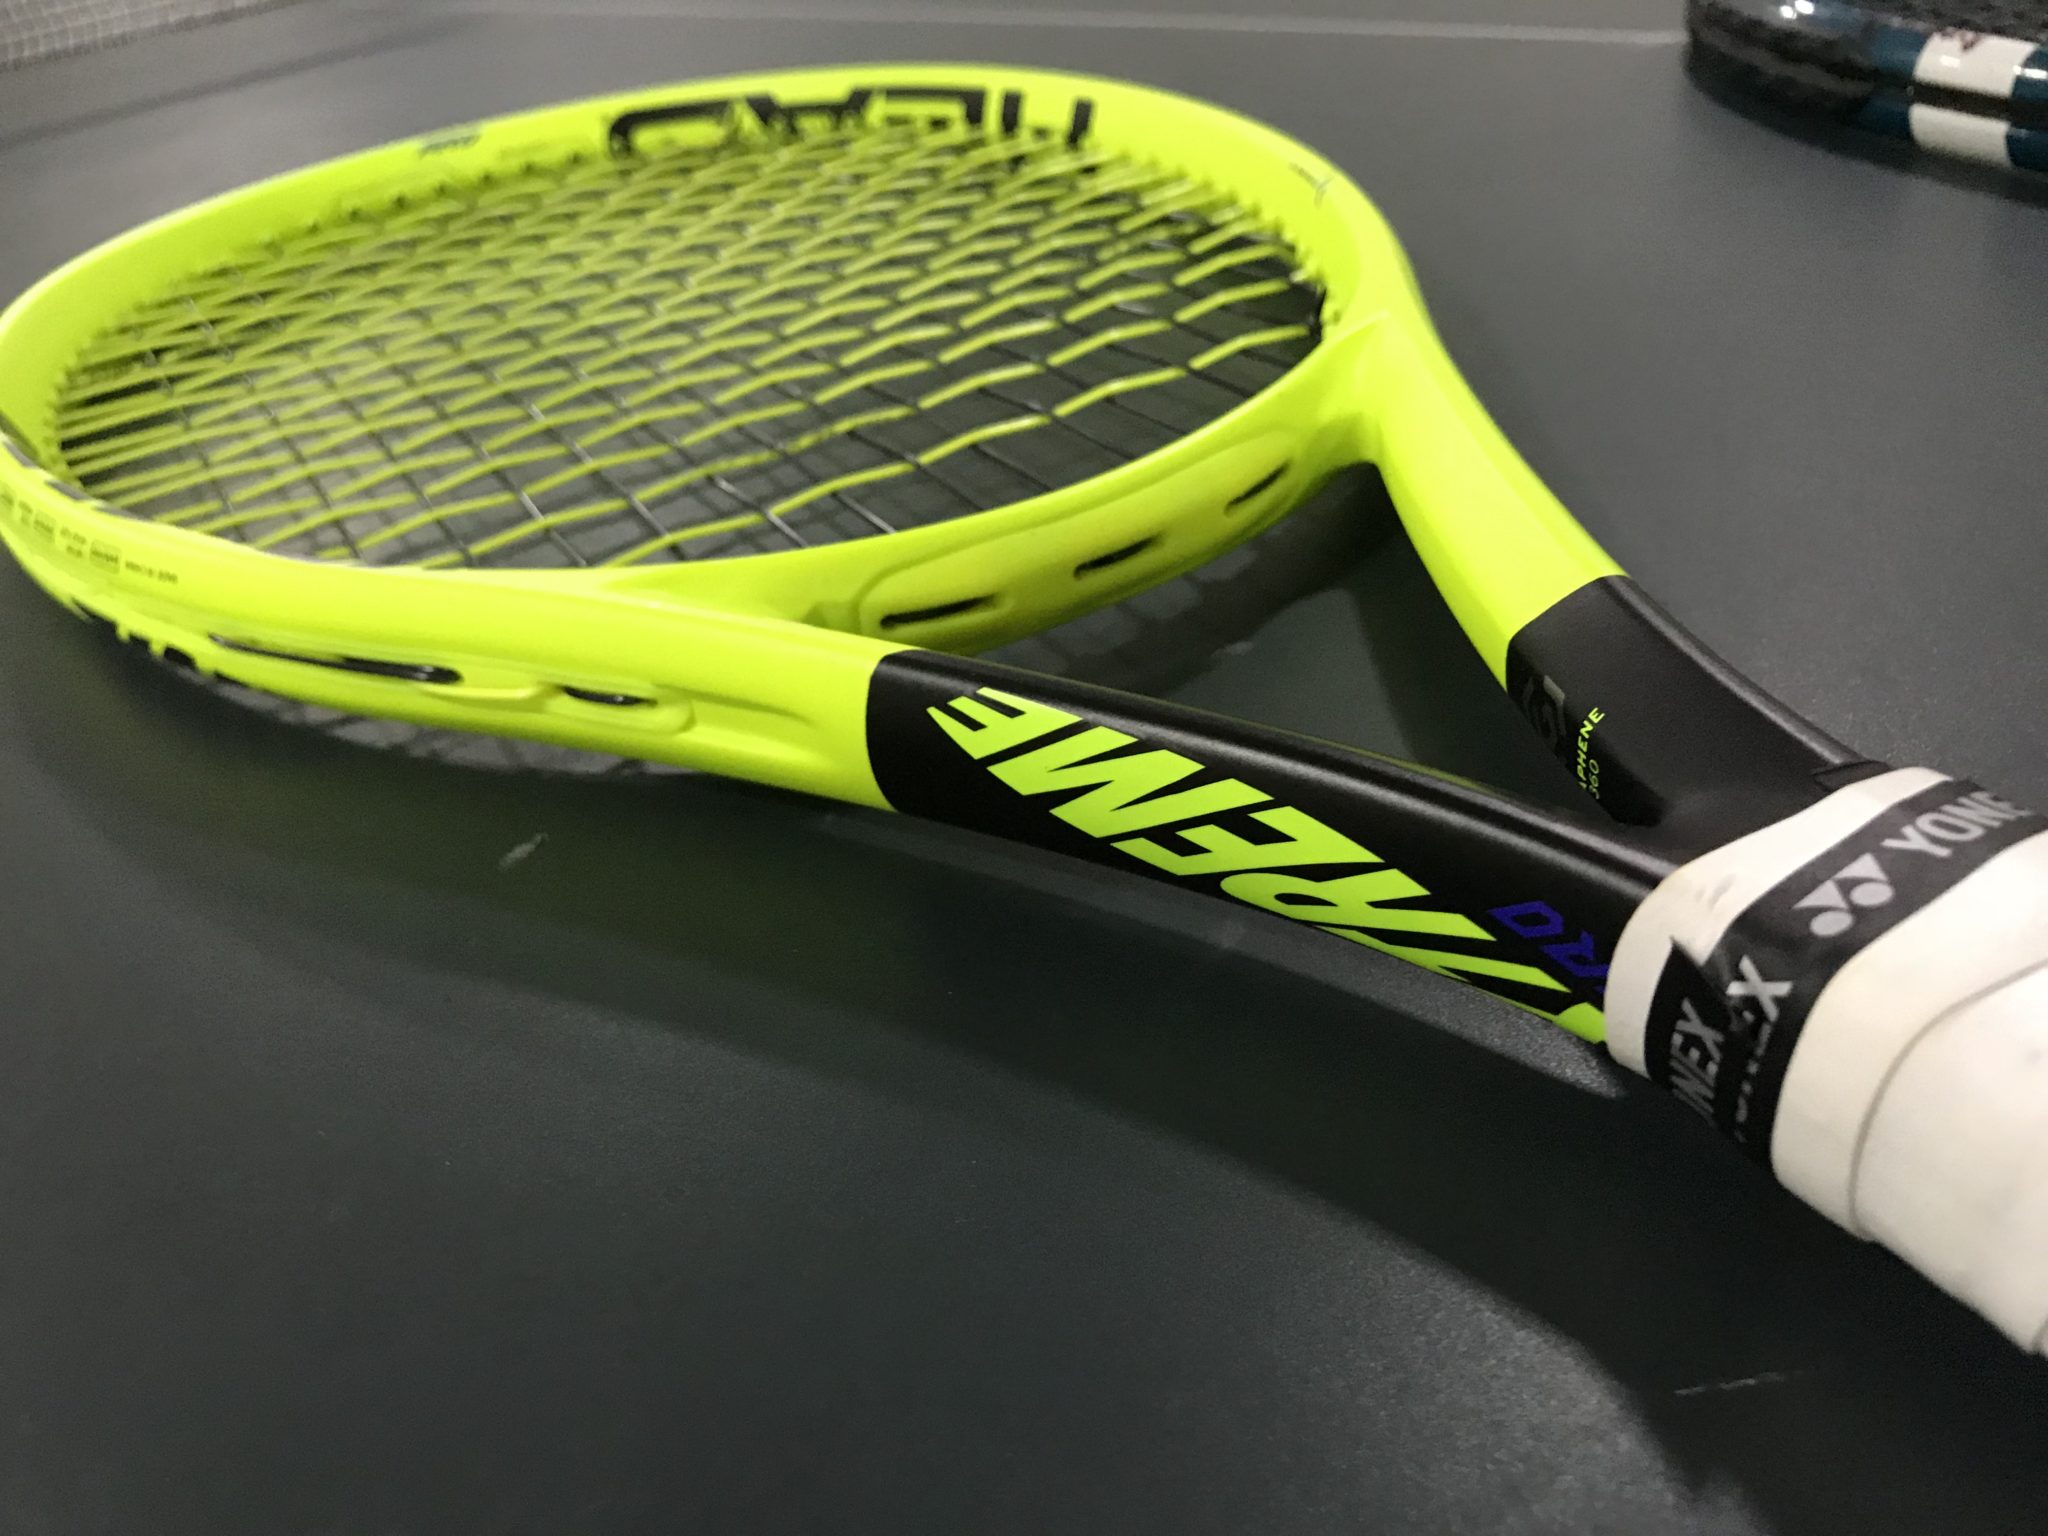 HEAD Tennis Racquets - Tennisnerd.net - The different HEAD racquet lines